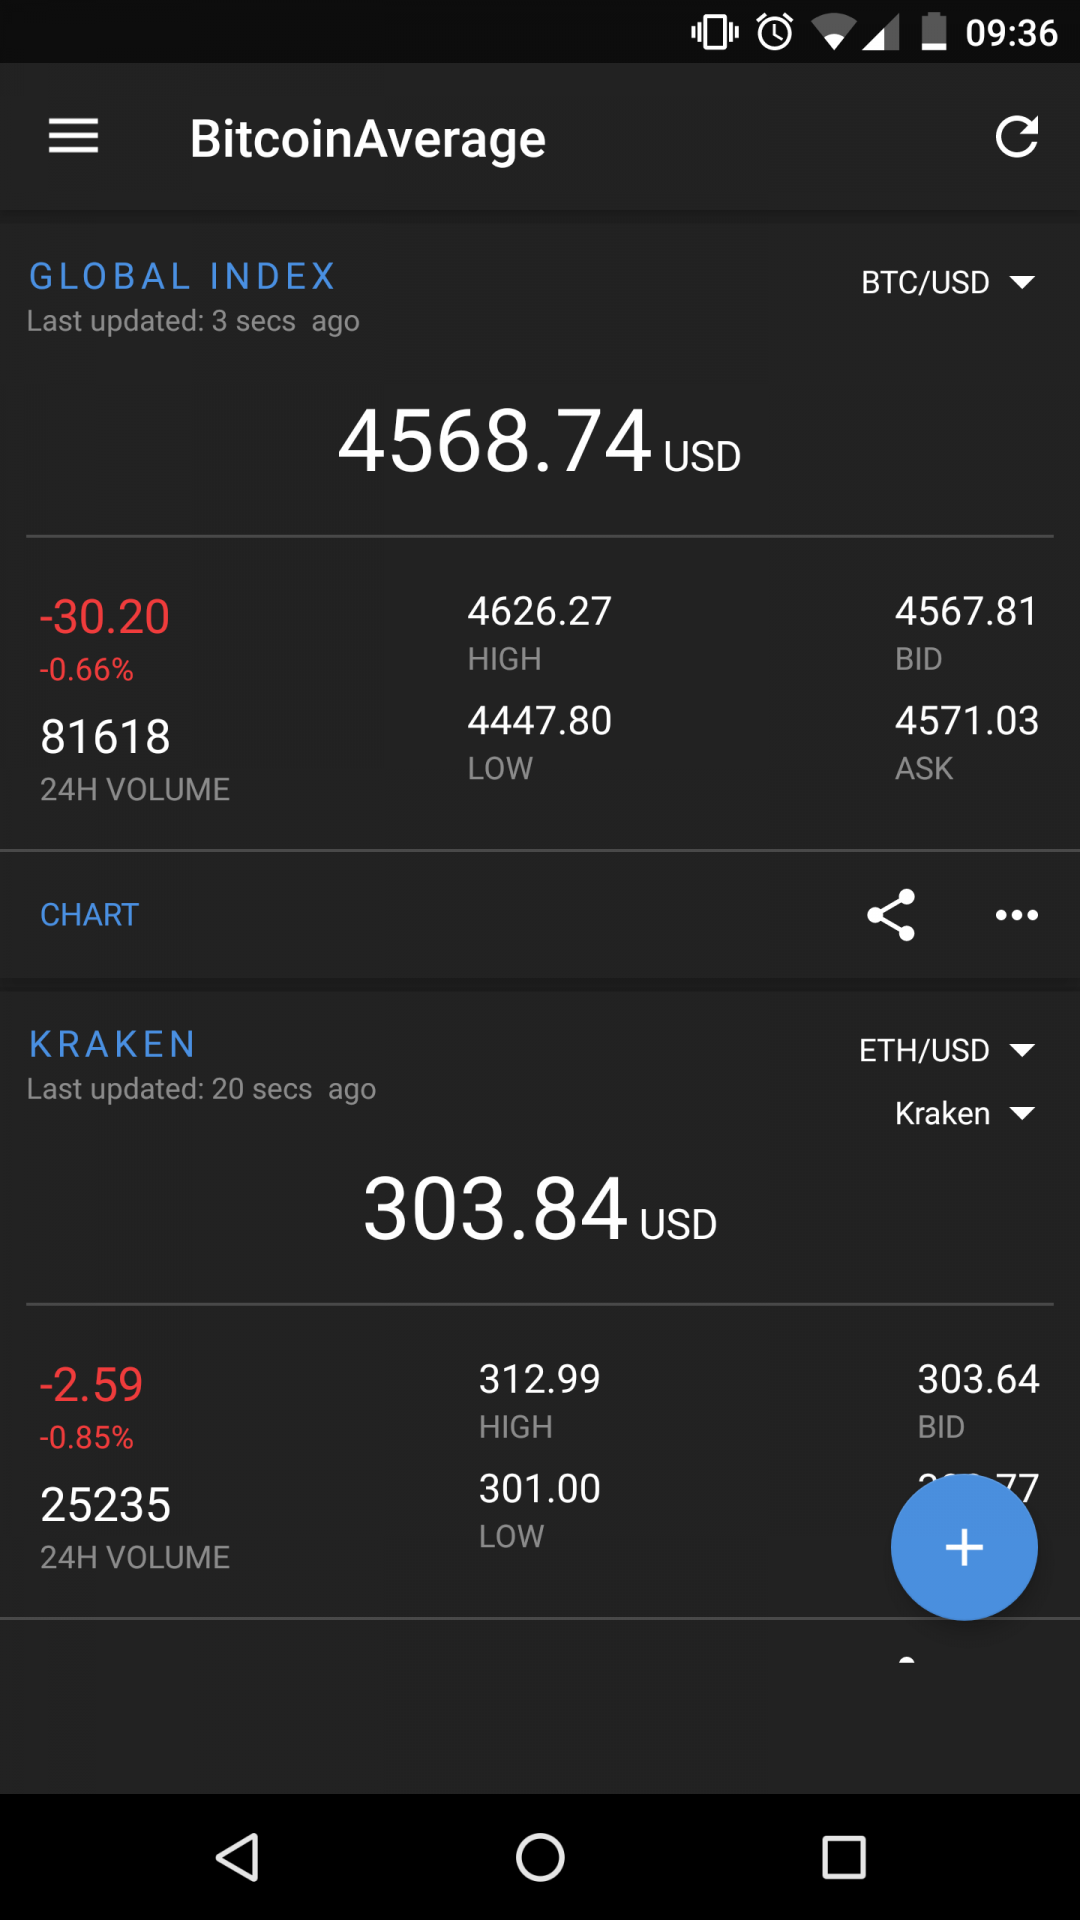 Bitcoin & Crypto Price Ticker Mobile App - BitcoinAverage